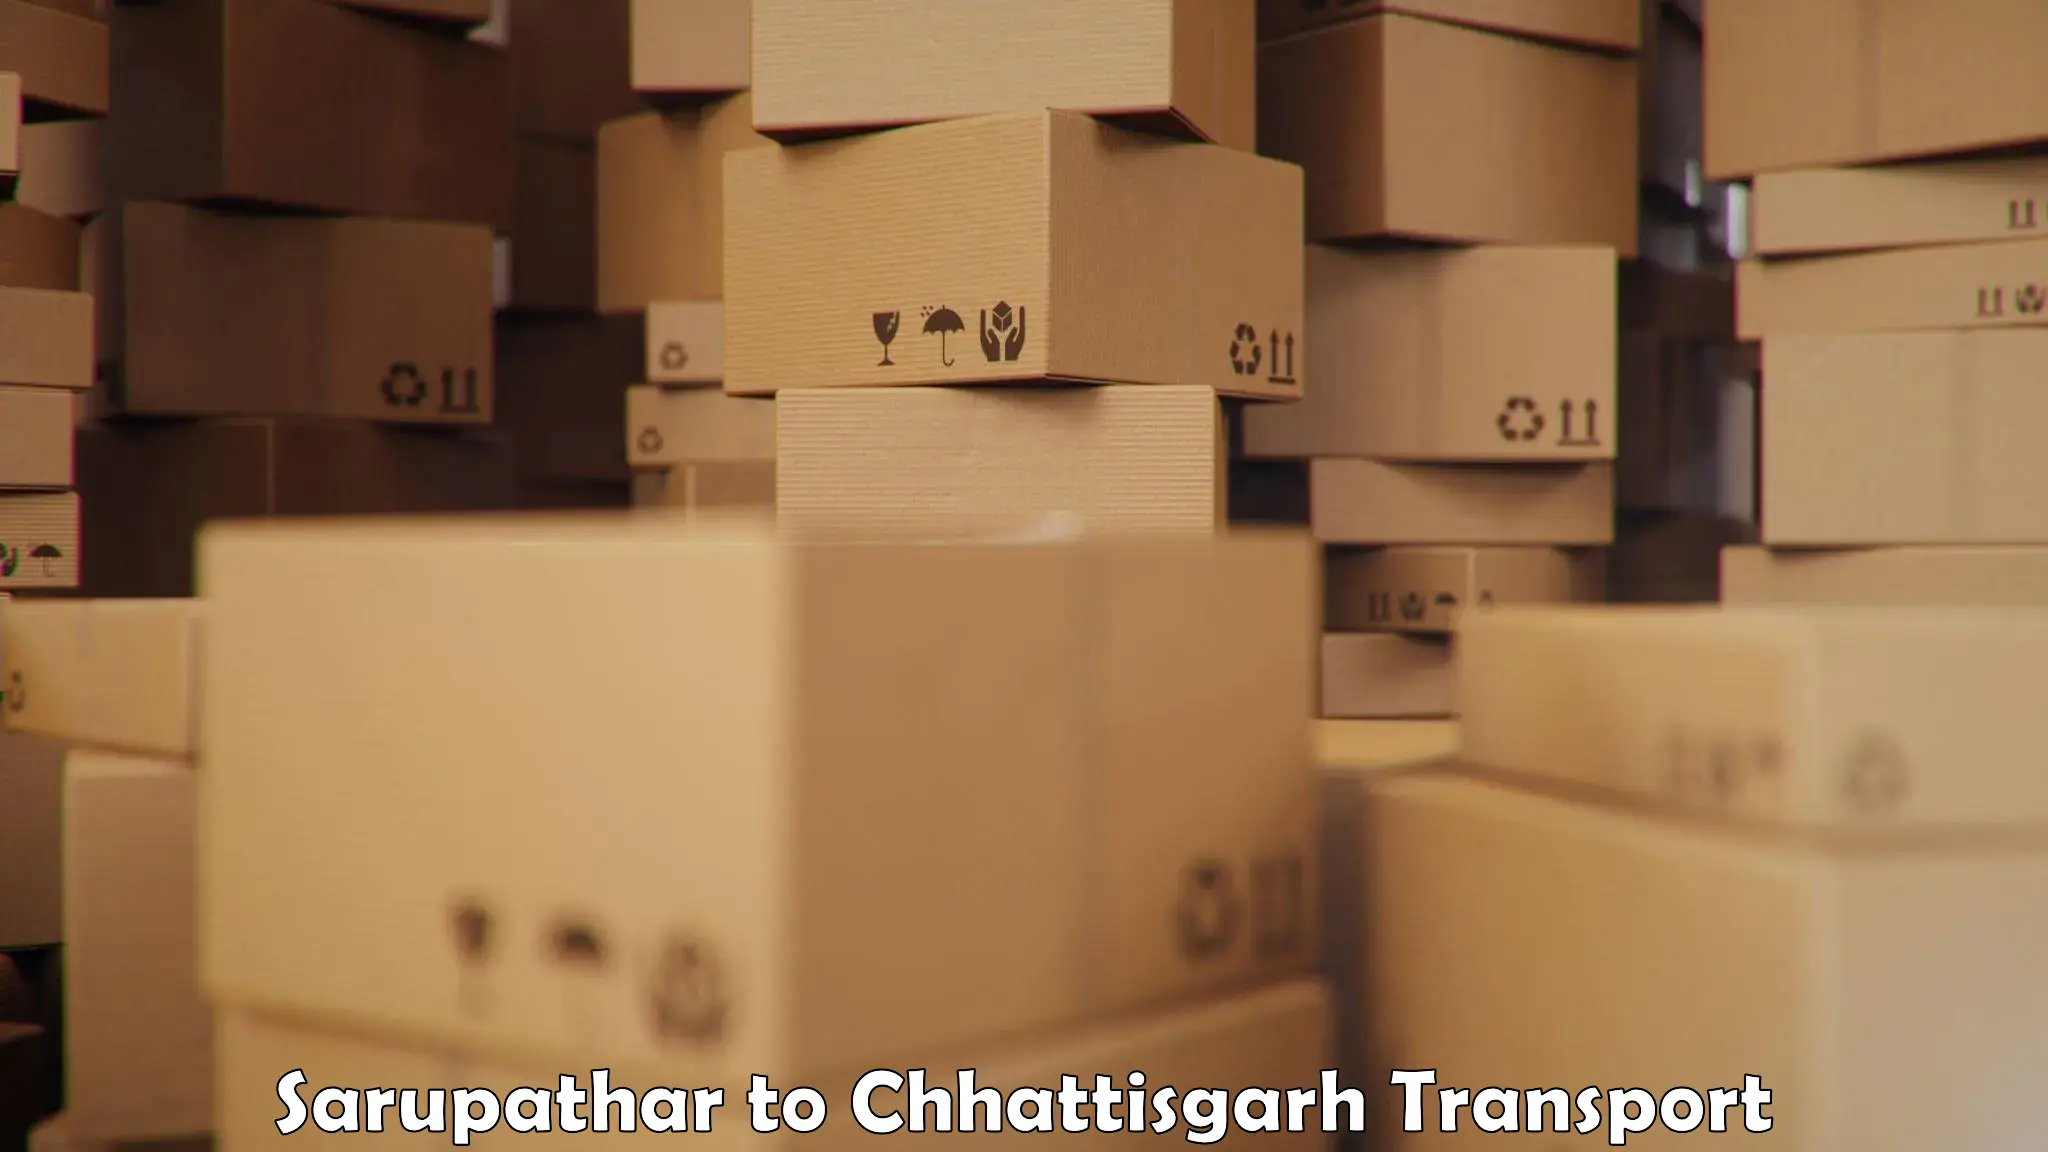 Truck transport companies in India Sarupathar to Korea Chhattisgarh